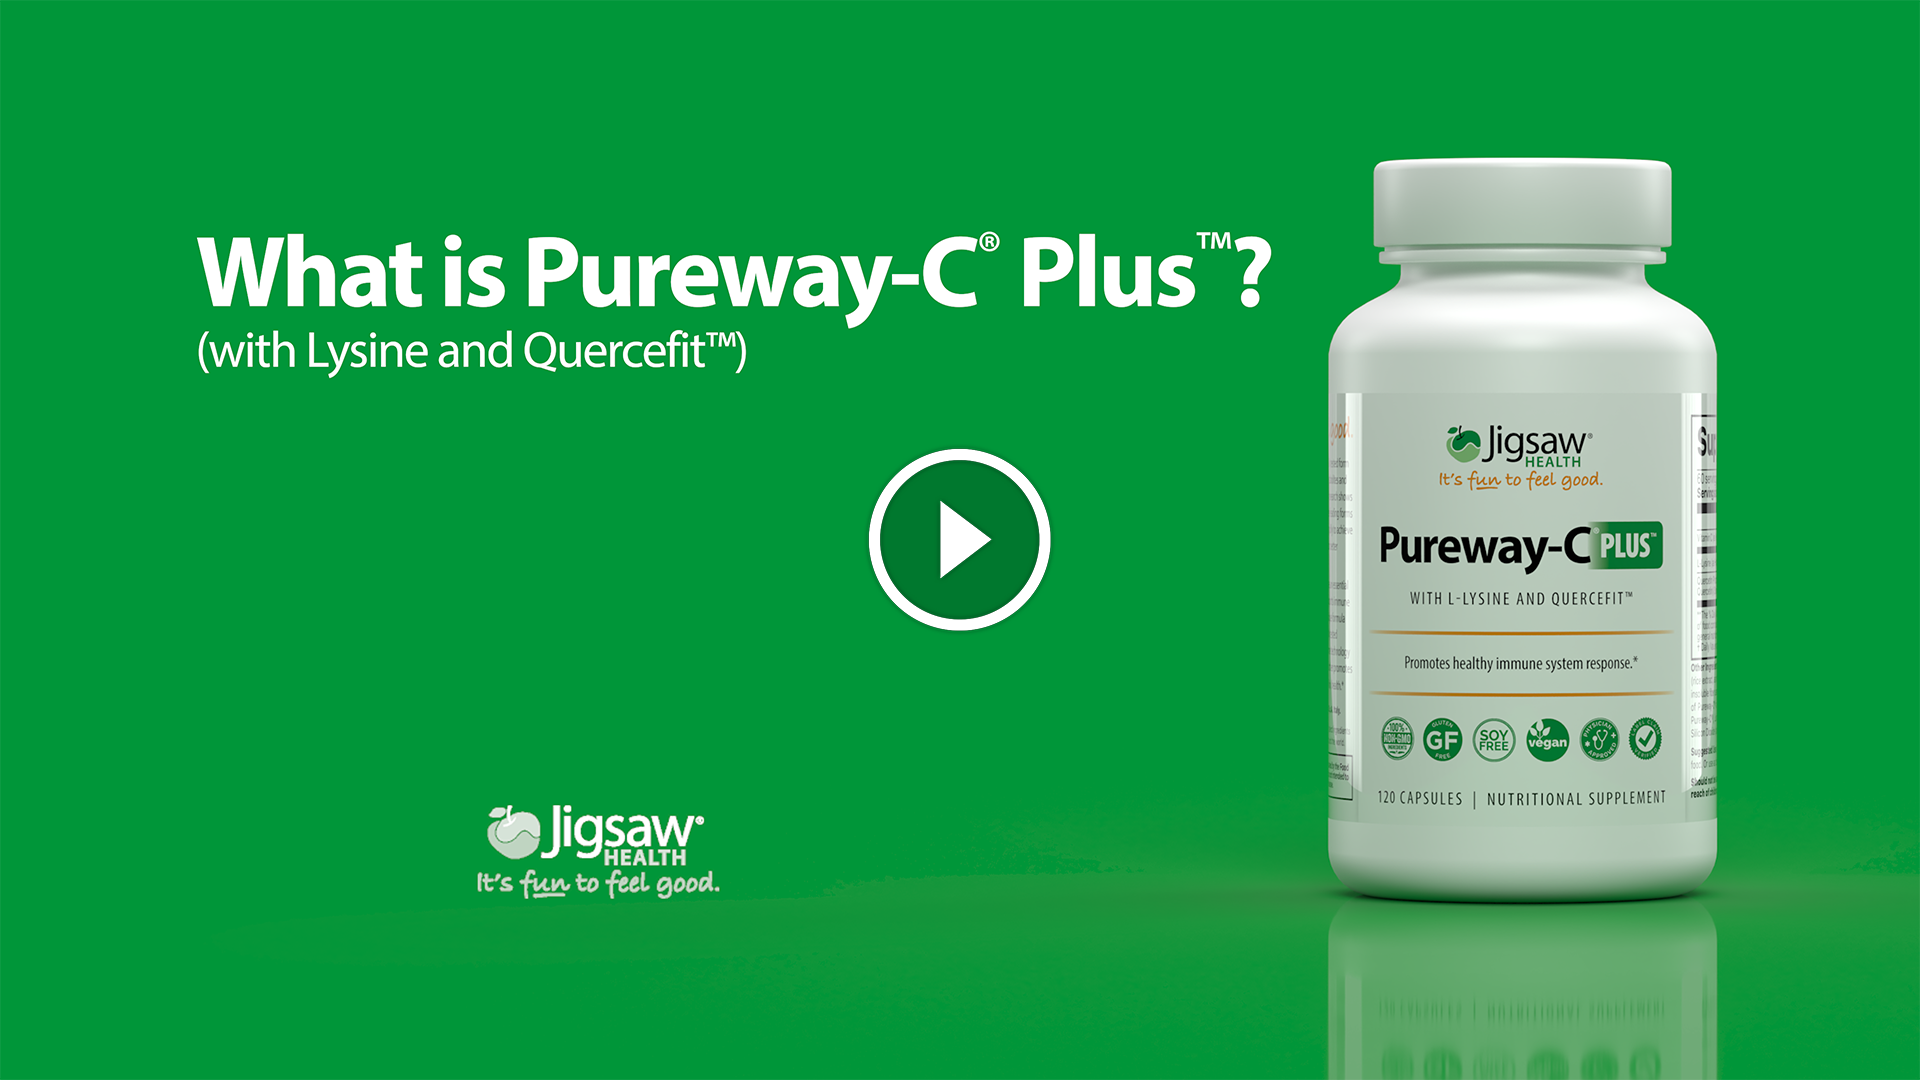 What is Pureway-C Plus?